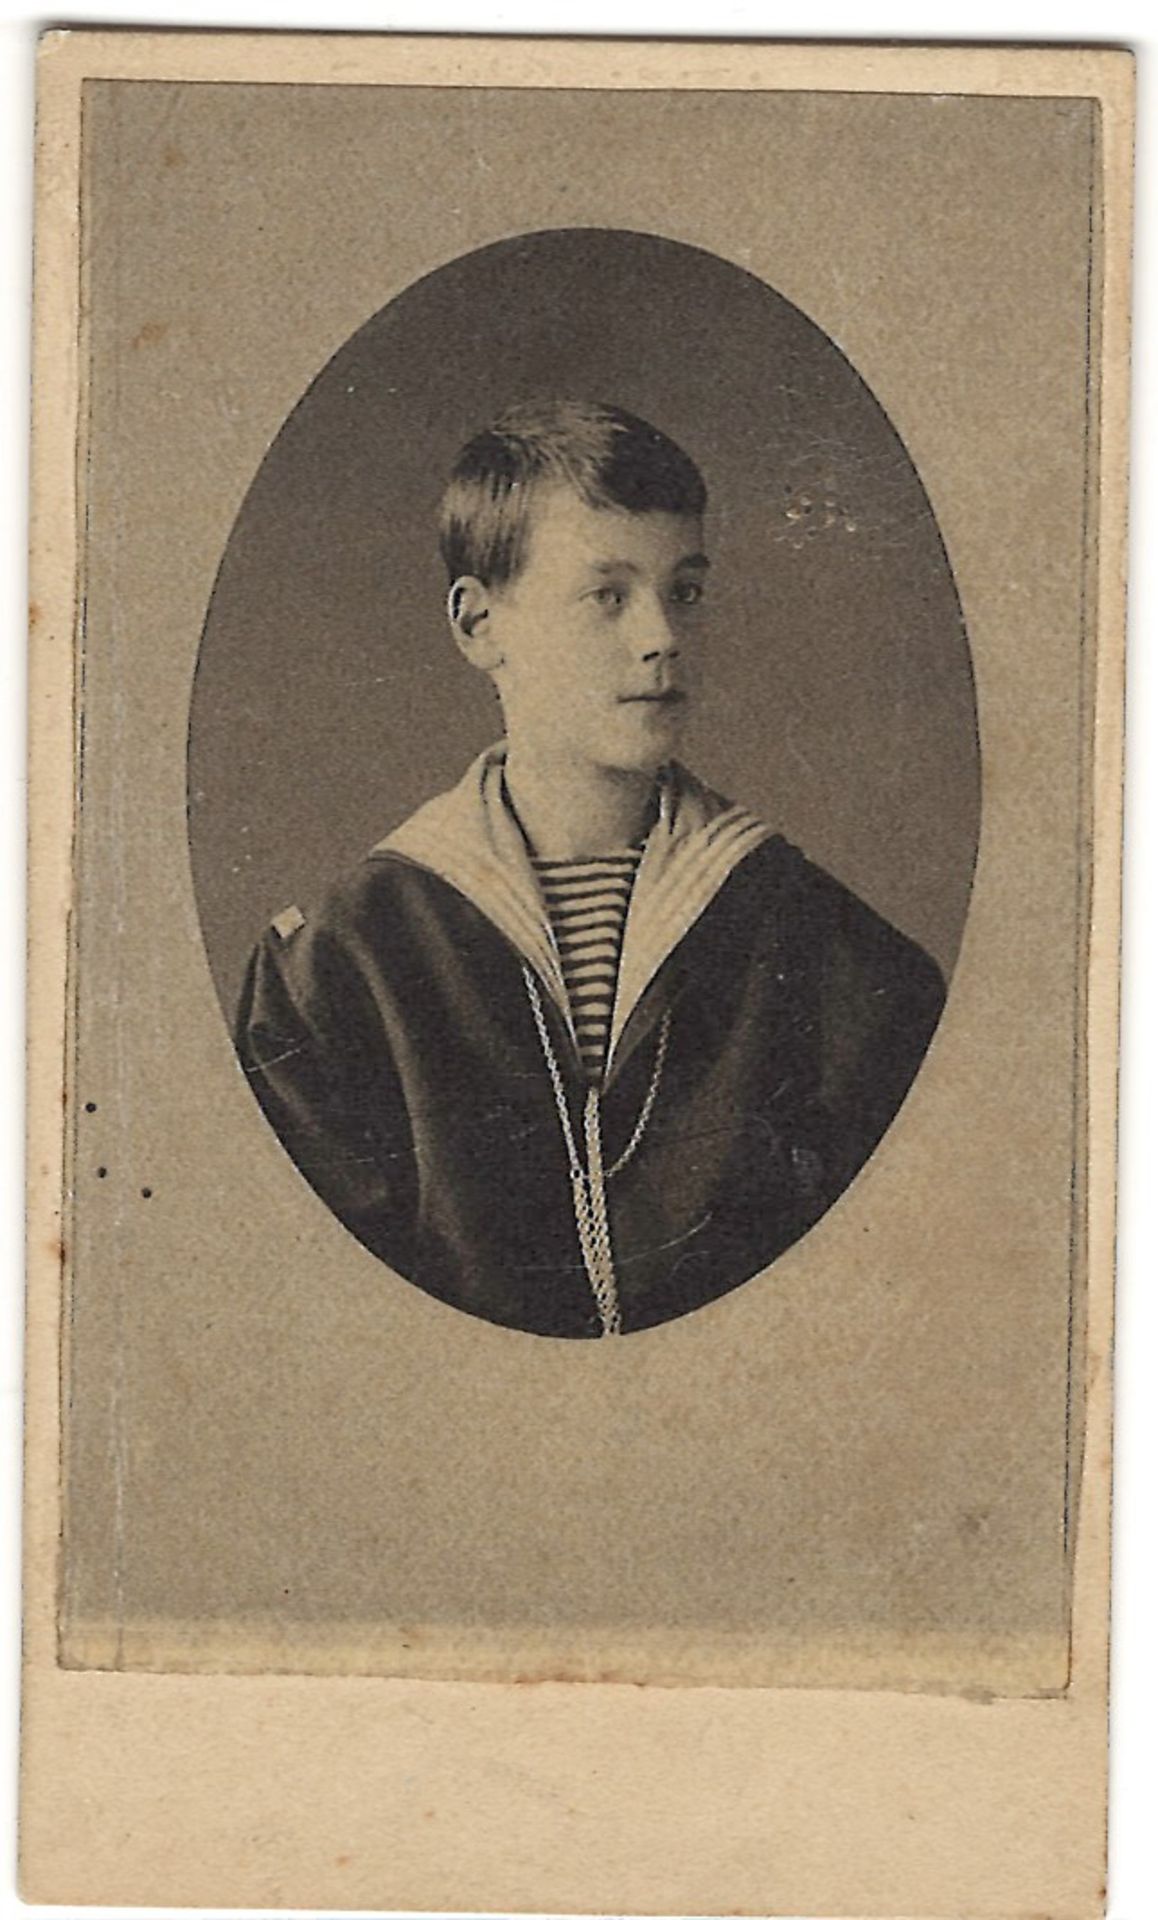 [Russian Empire. Romanov]. Visiting card of Grand Duke Michael Alexandrovich of Russia. Photoprint. 